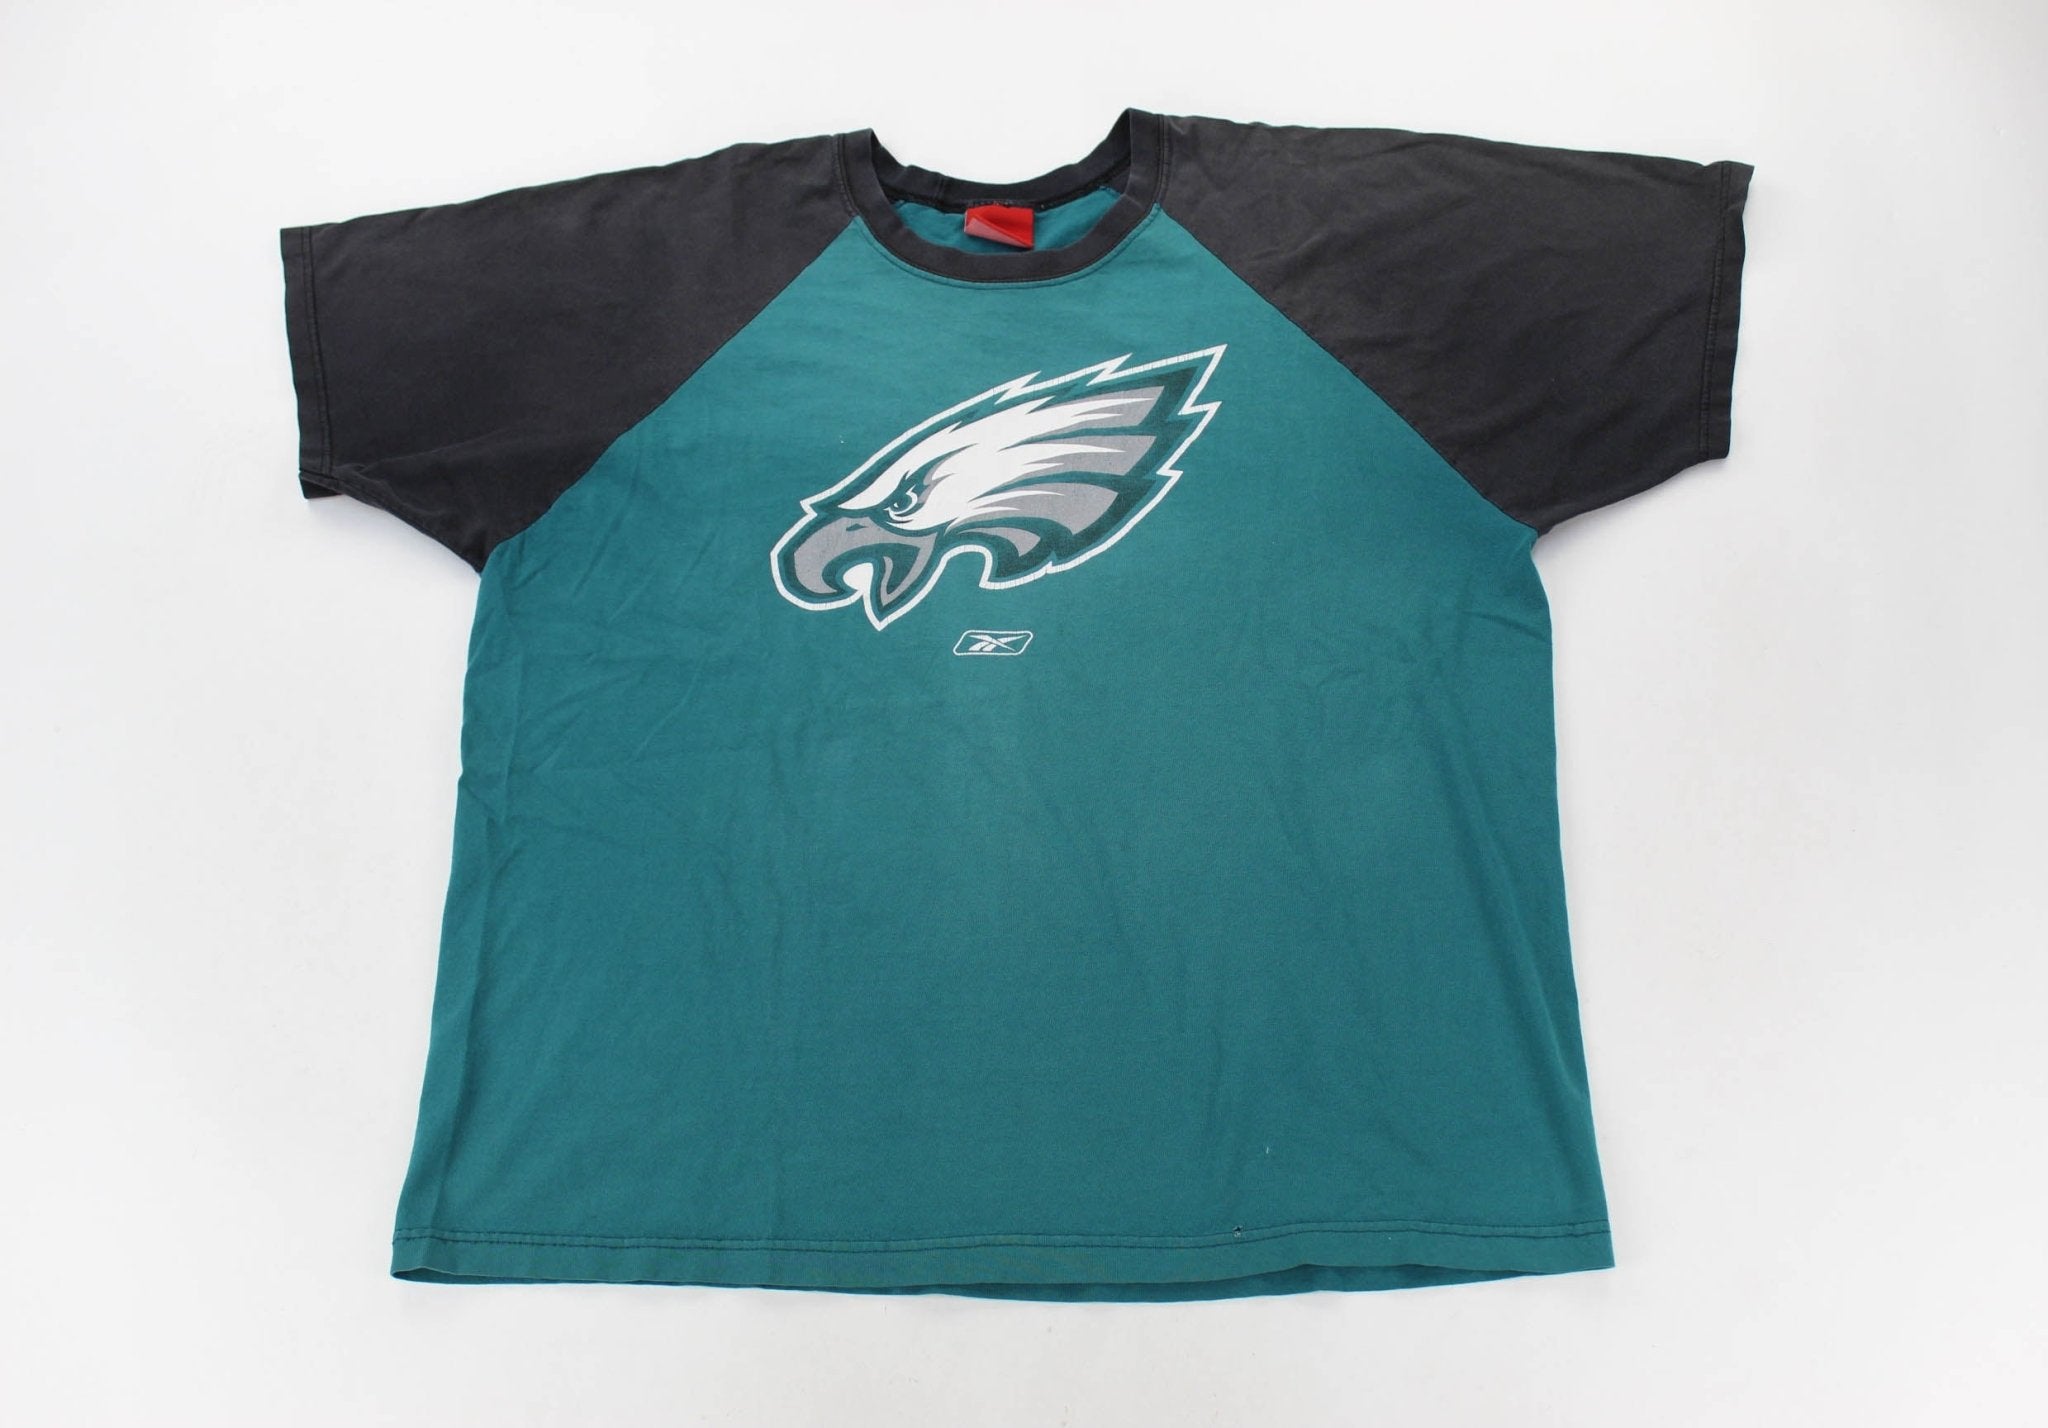 Vintage Philadelphia Eagles sweatshirt, 80s NFL graphic crewneck